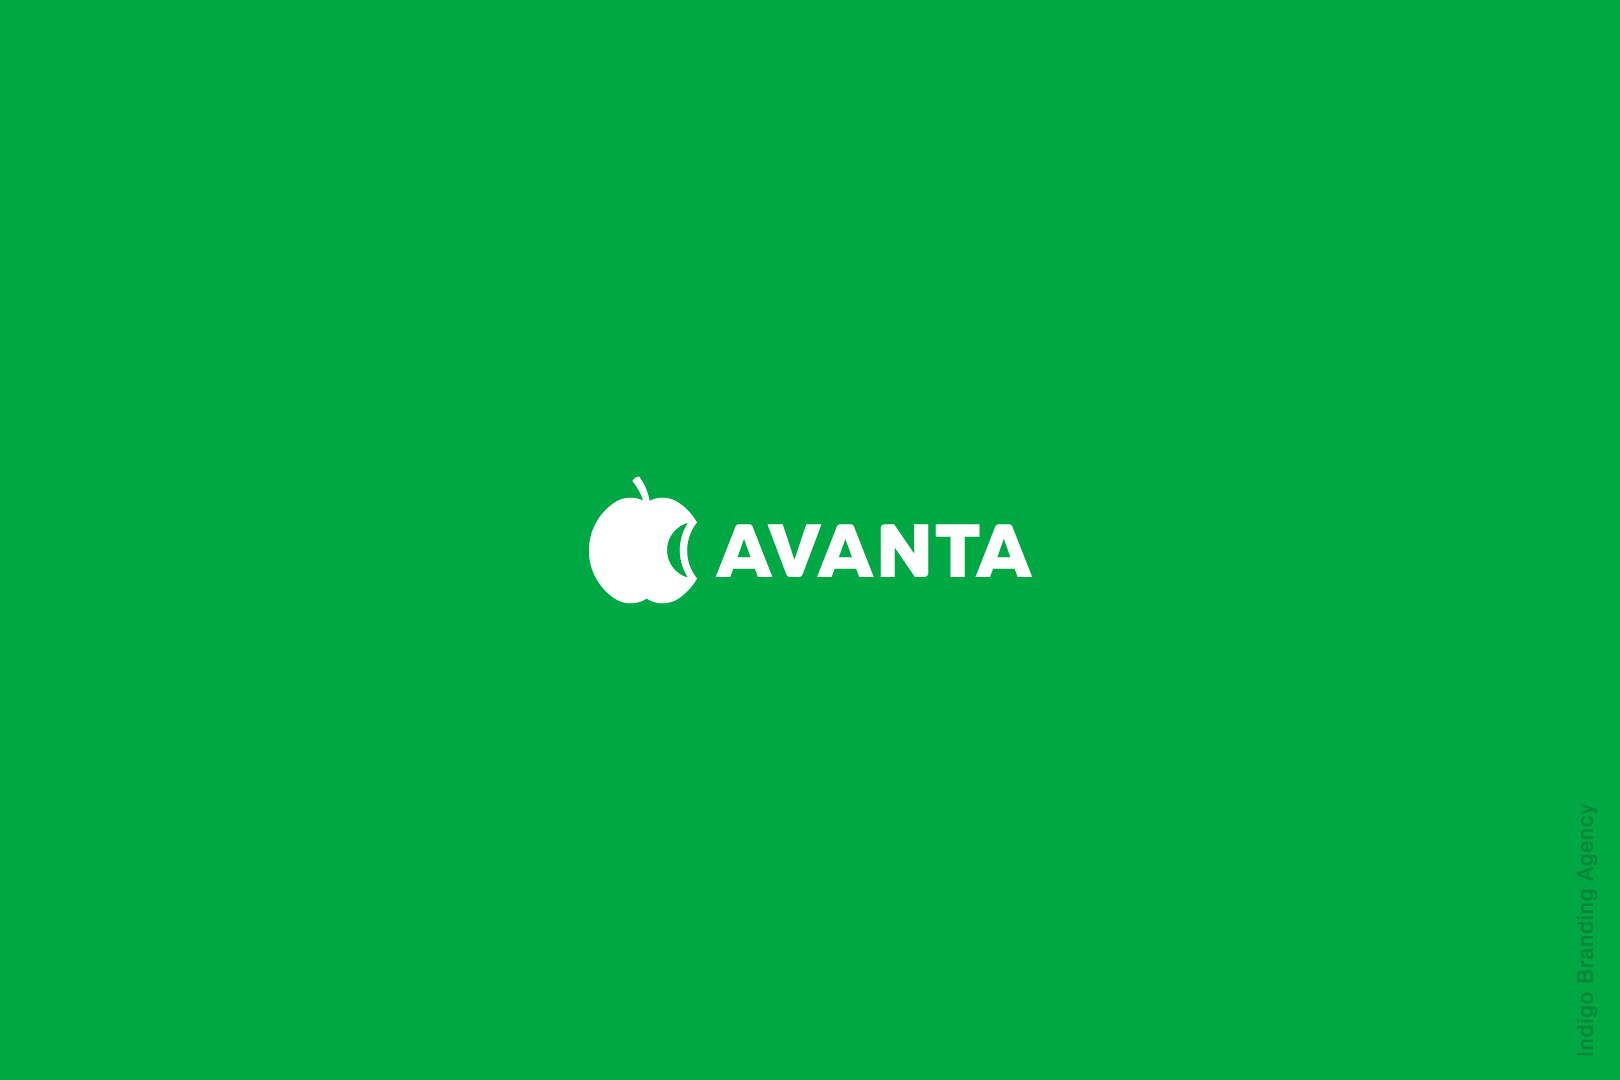 Avanta rebranding by Indigo branding